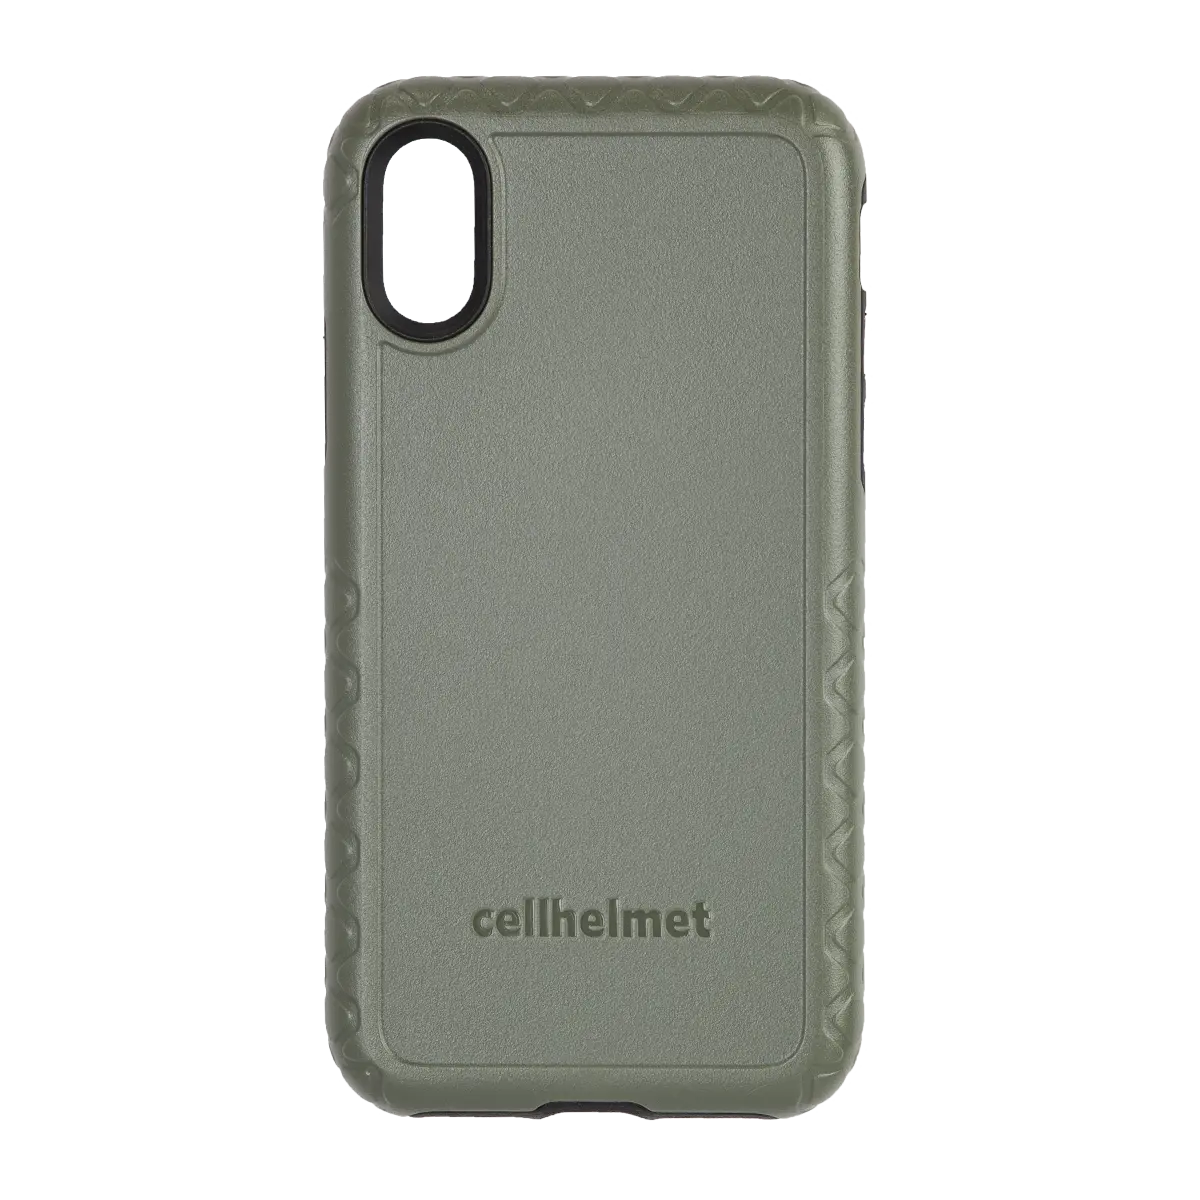 Green cellhelmet Customizable Case for iPhone XR